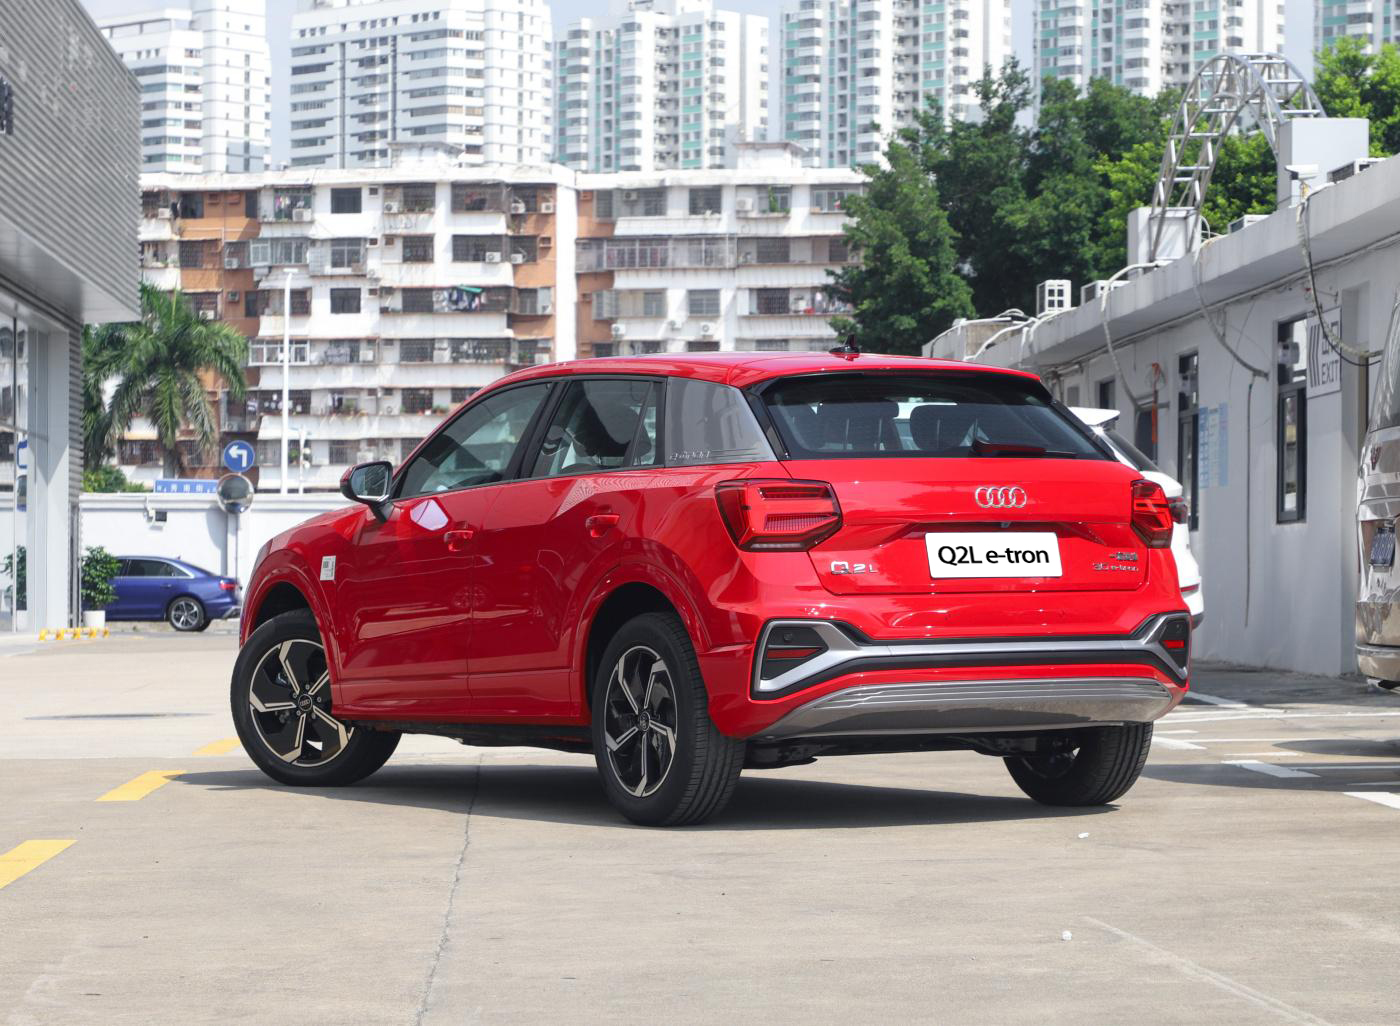 2022 Audi Q2L E-Tron Small SUV Support Export Trade in China - Audi - 4